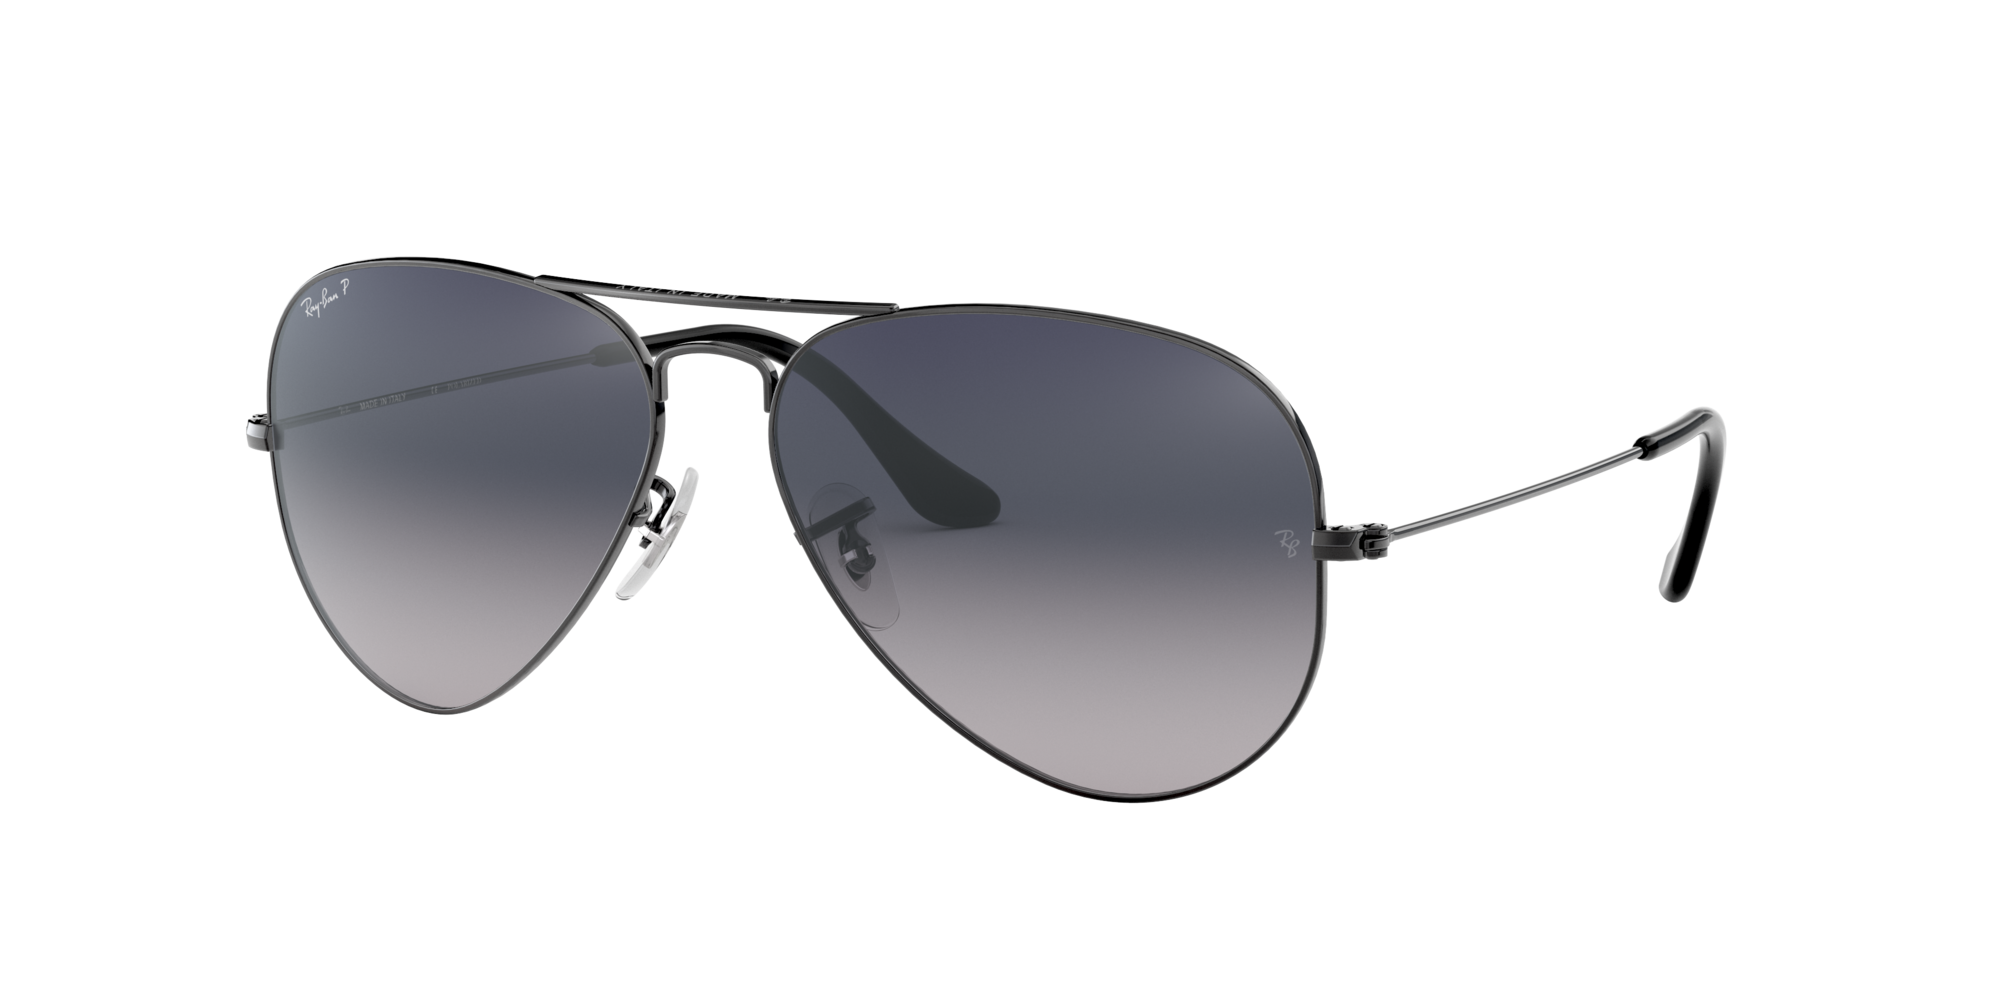 ray ban gunmetal polarized sunglasses